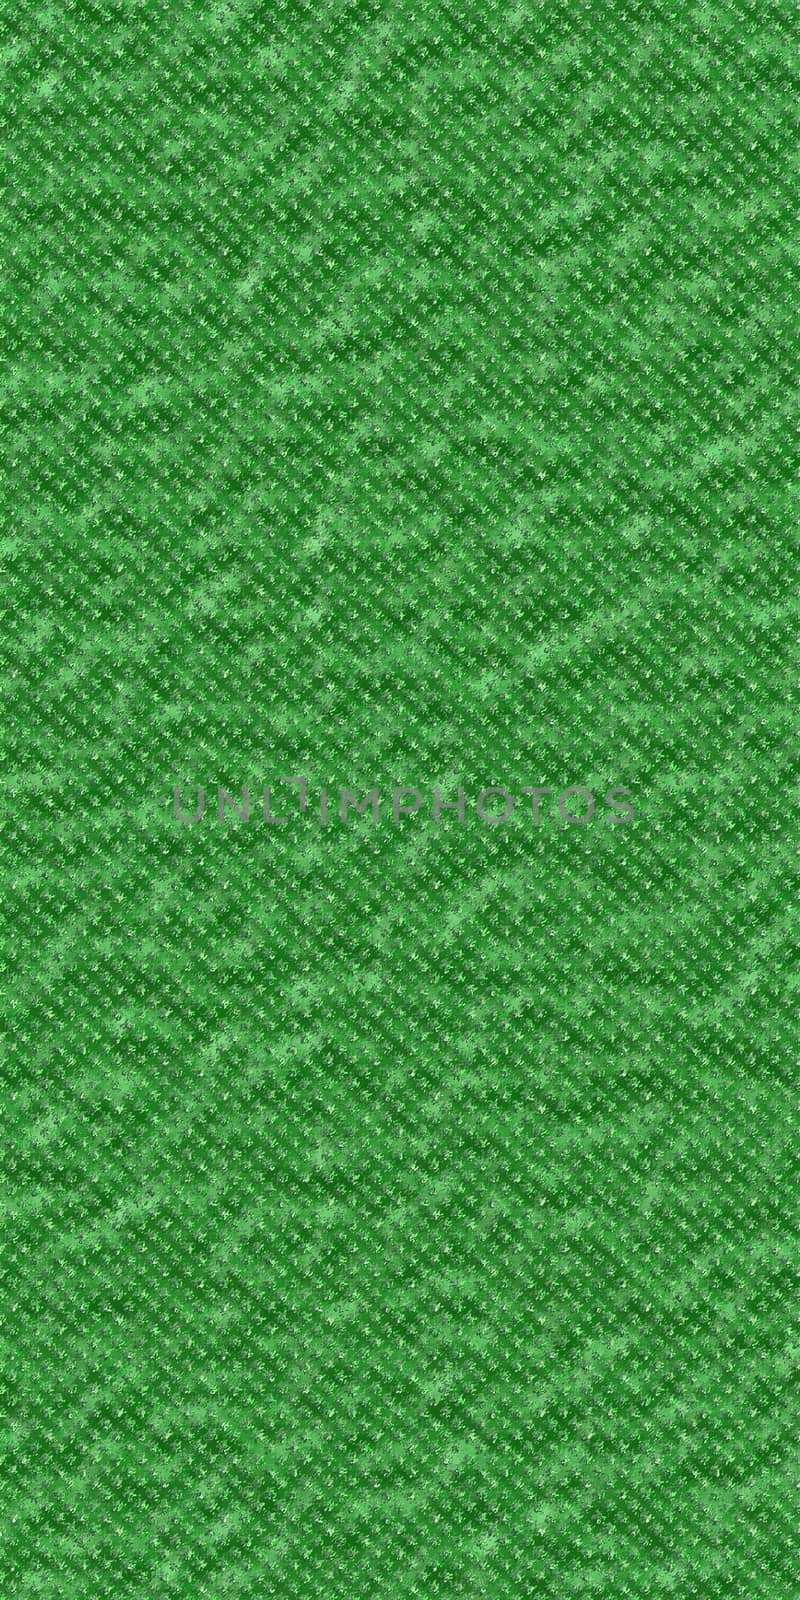 Liquid metal blot on green background by sfinks